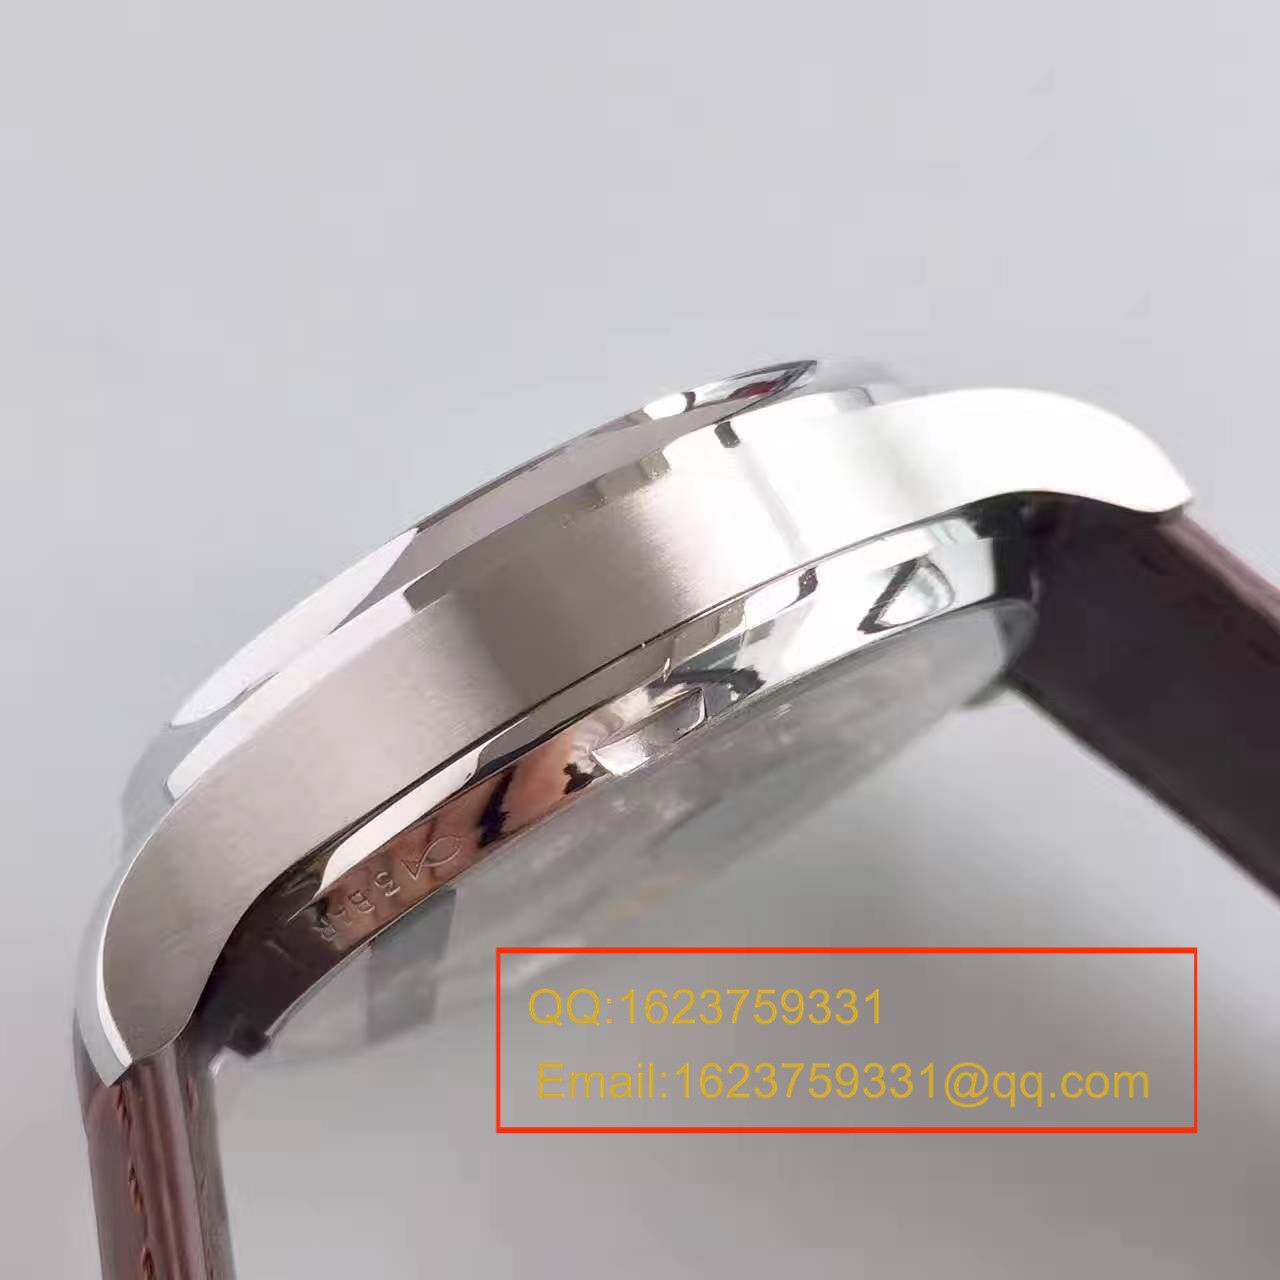 【ZF厂顶级复刻精仿手表】万国葡萄牙系列《万国七日链》IW500702腕表 